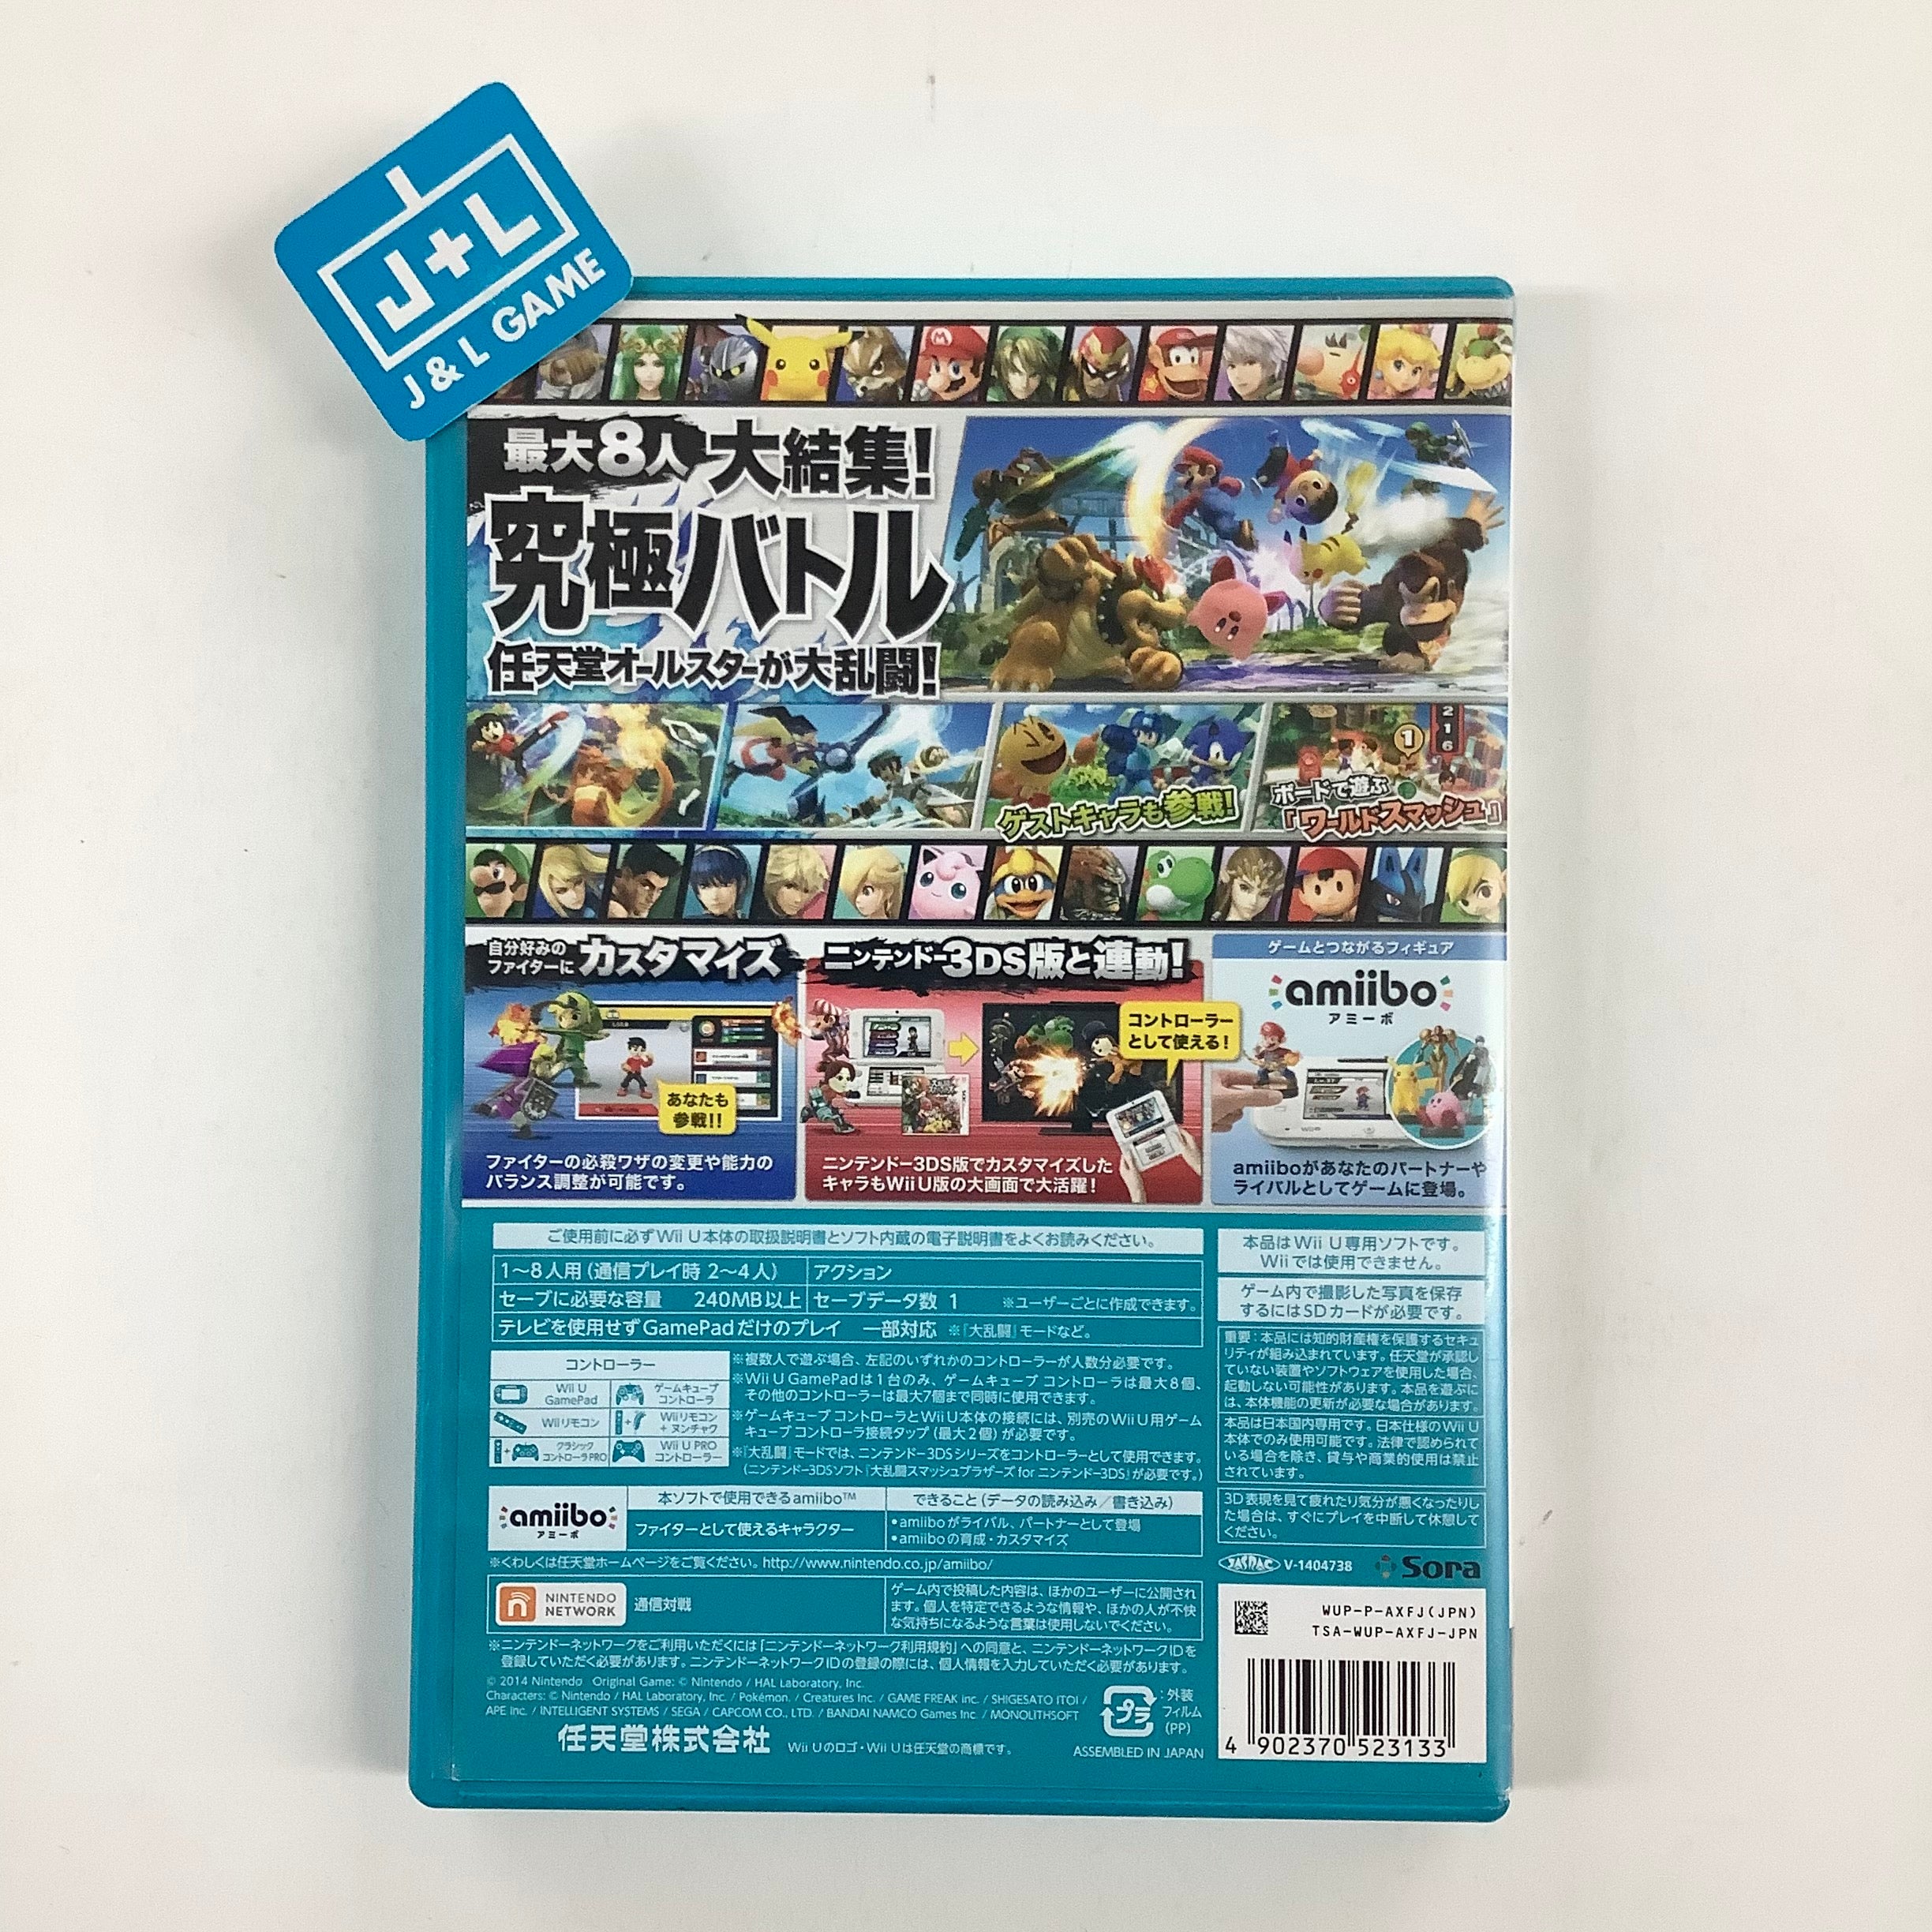 Super Smash Bros. - Nintendo Wii U [Pre-Owned] (Japanese Import) Video Games Nintendo   